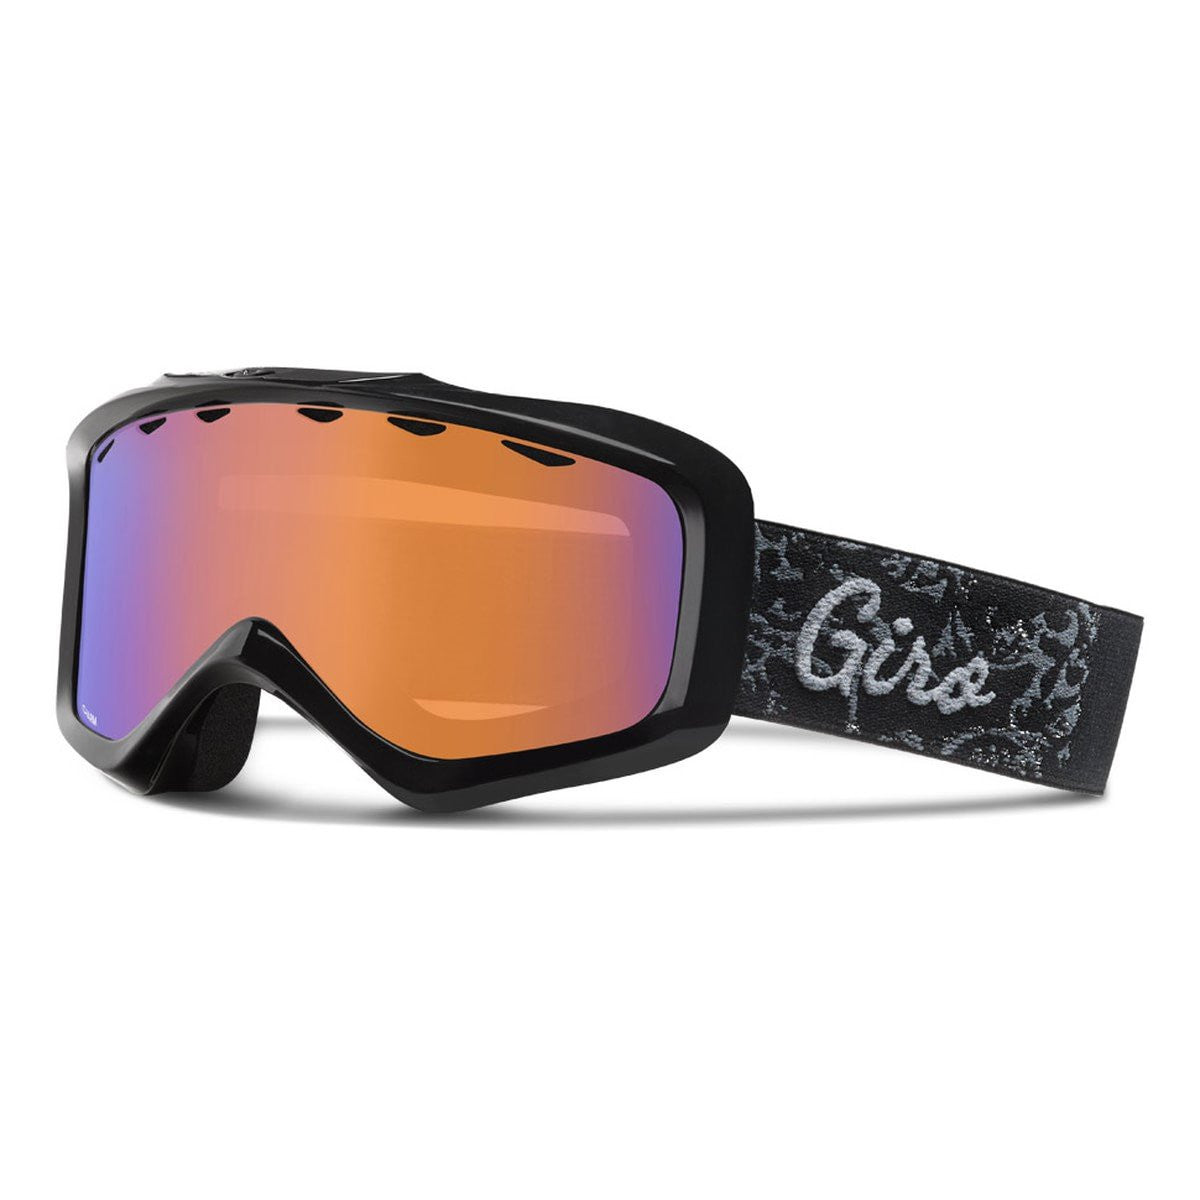 Giro Women's Charm Snow Goggle - Openbox Black Filigree Persimmon Boost Snow Goggles